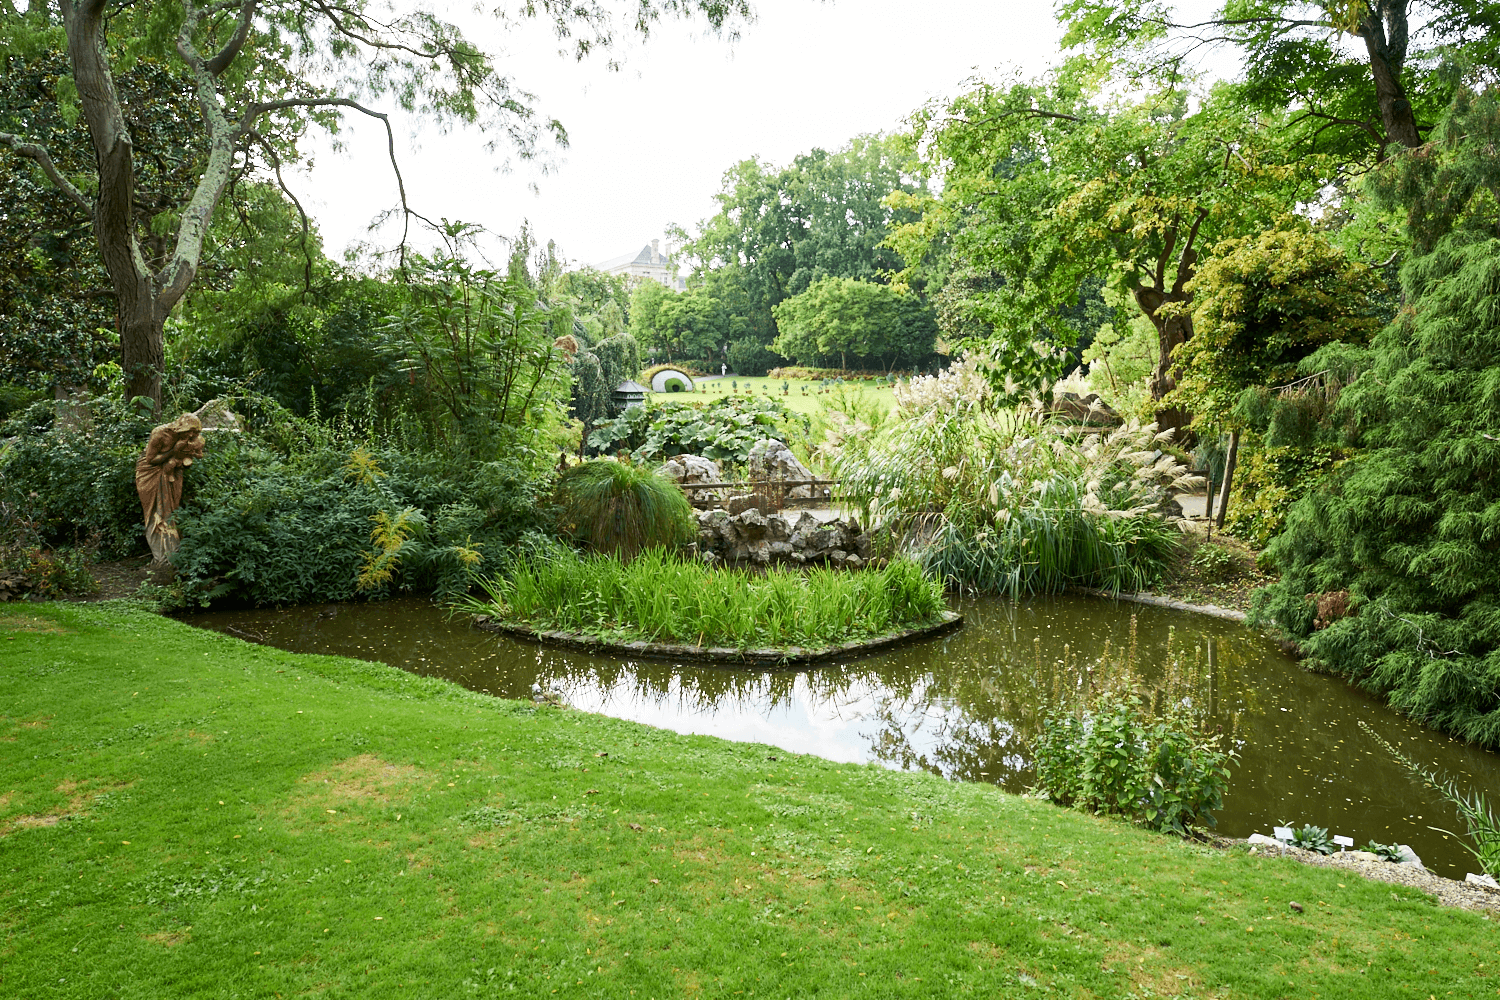 "Jardin du Plantes" in Nantes